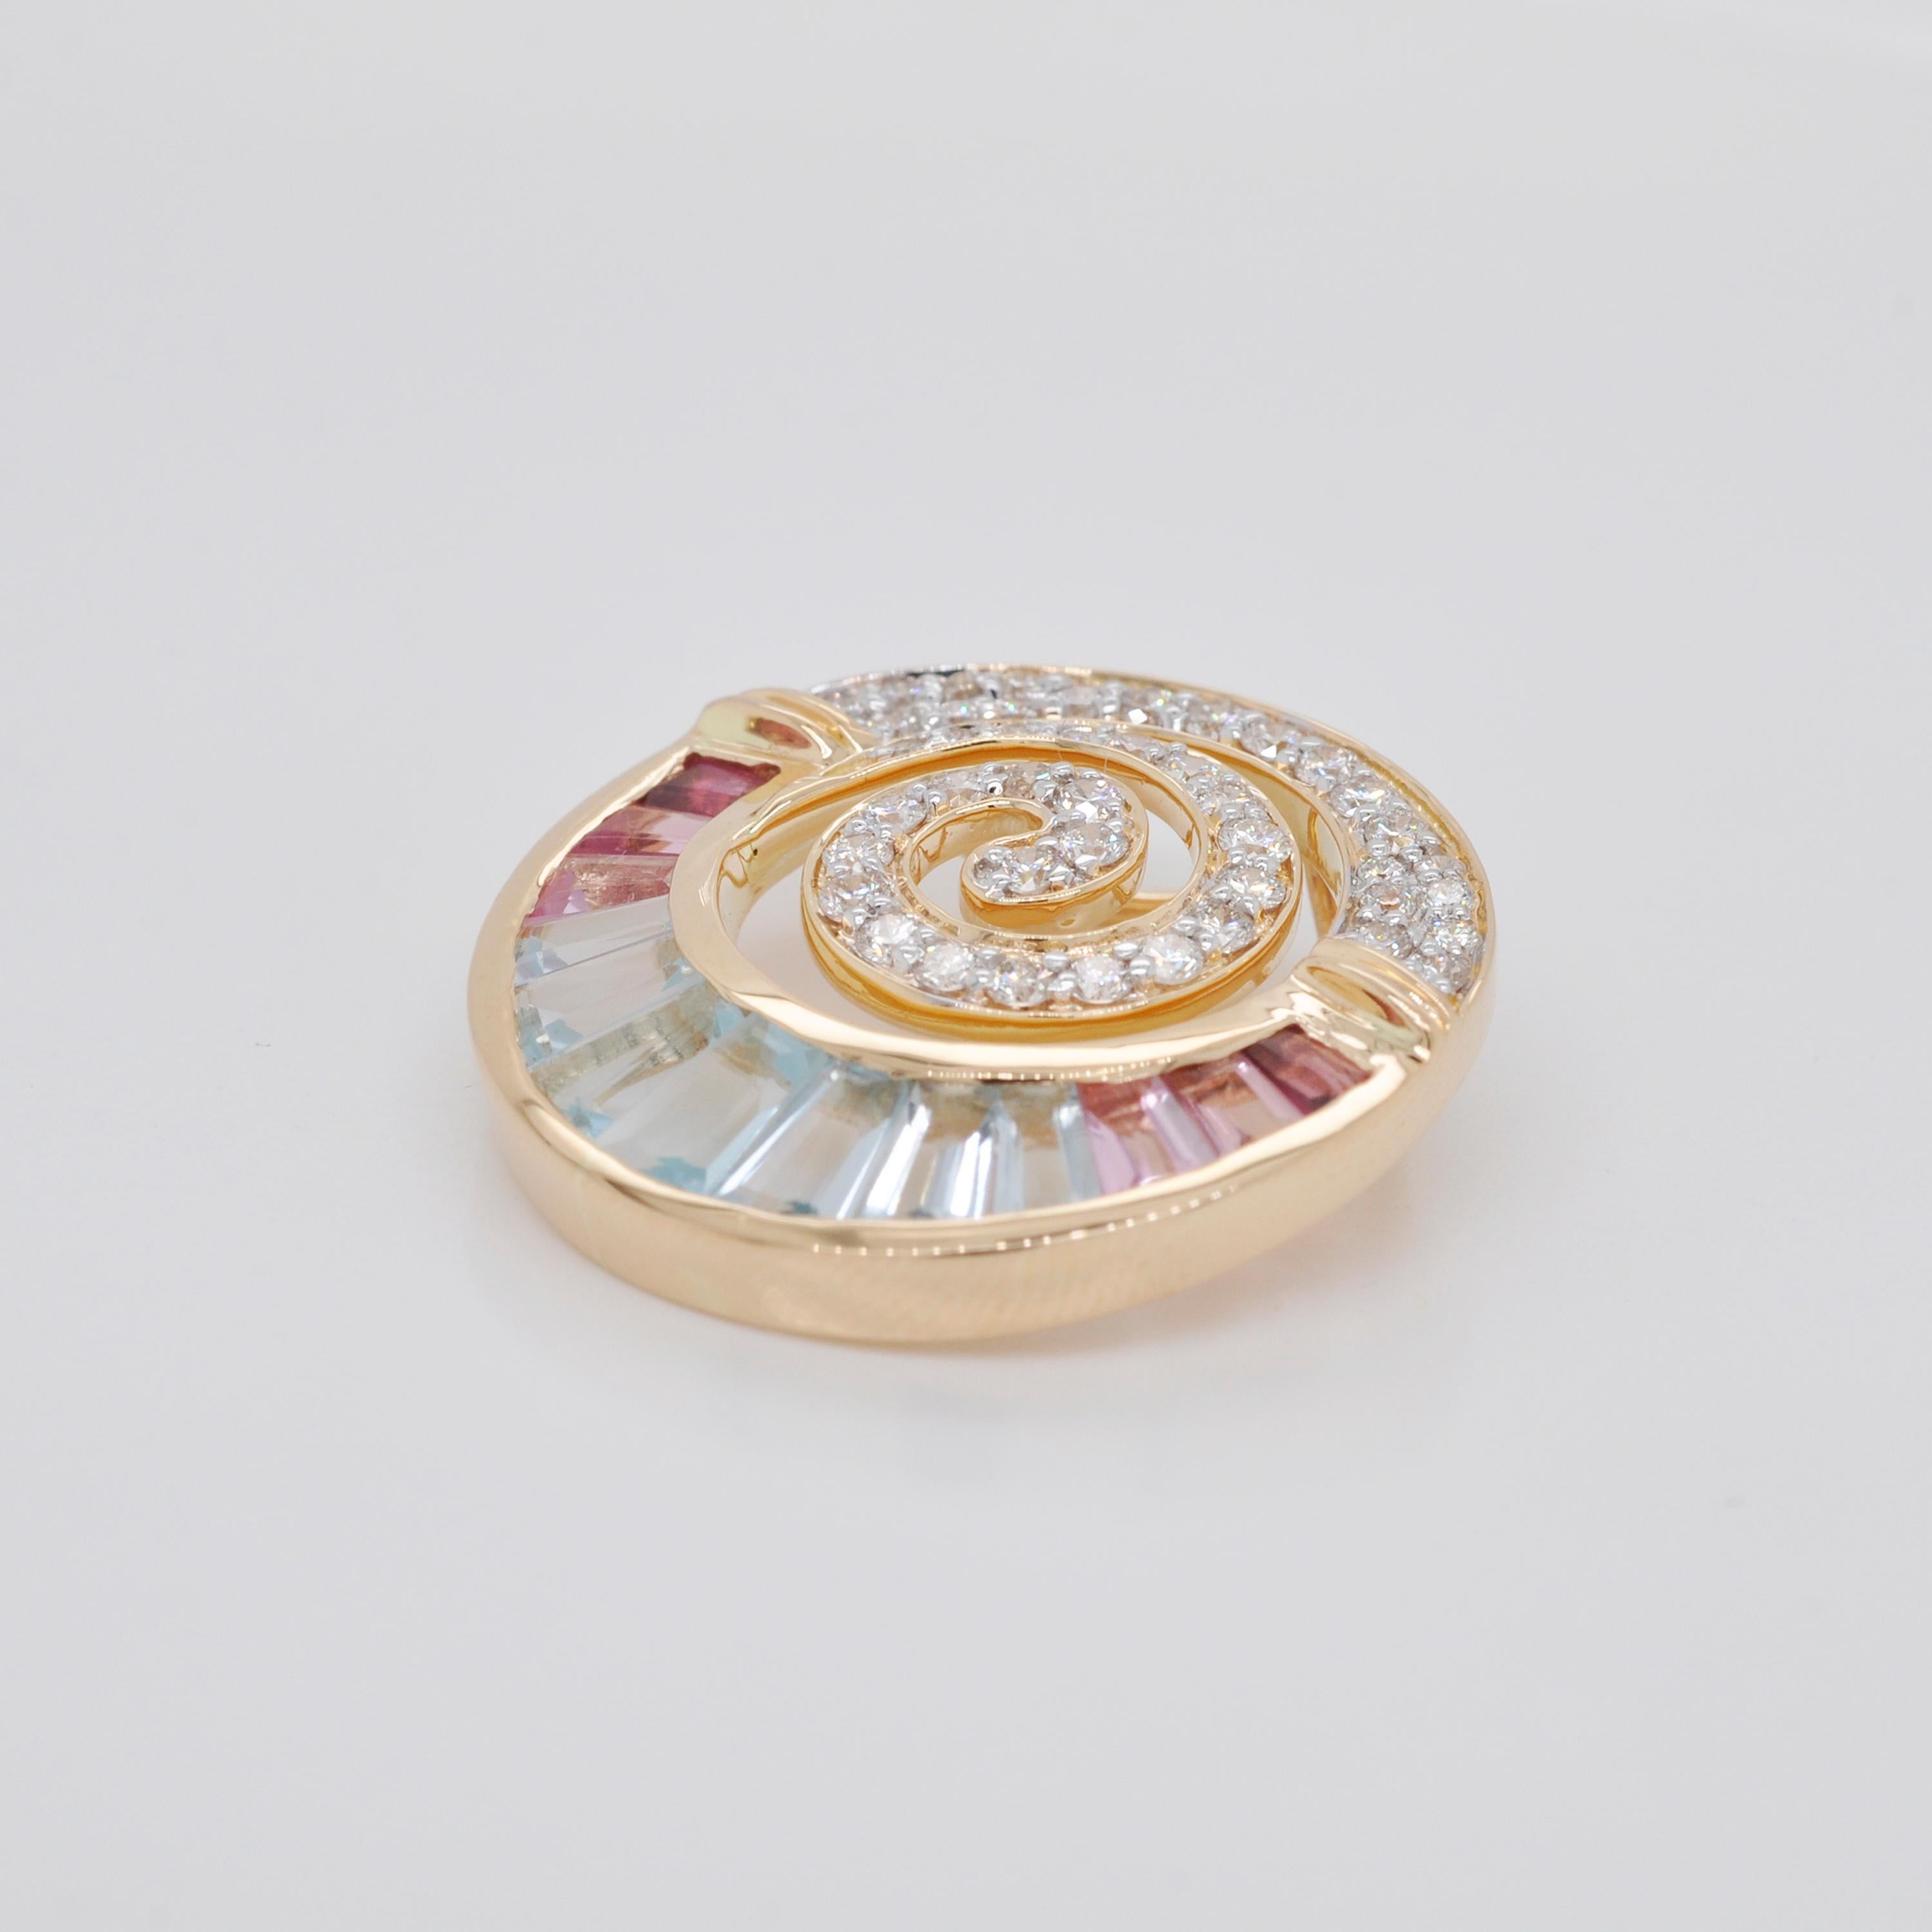 Tapered Baguette 18 Karat Gold Aquamarine Pink Tourmaline Diamond Pendant Necklace Earrings Set